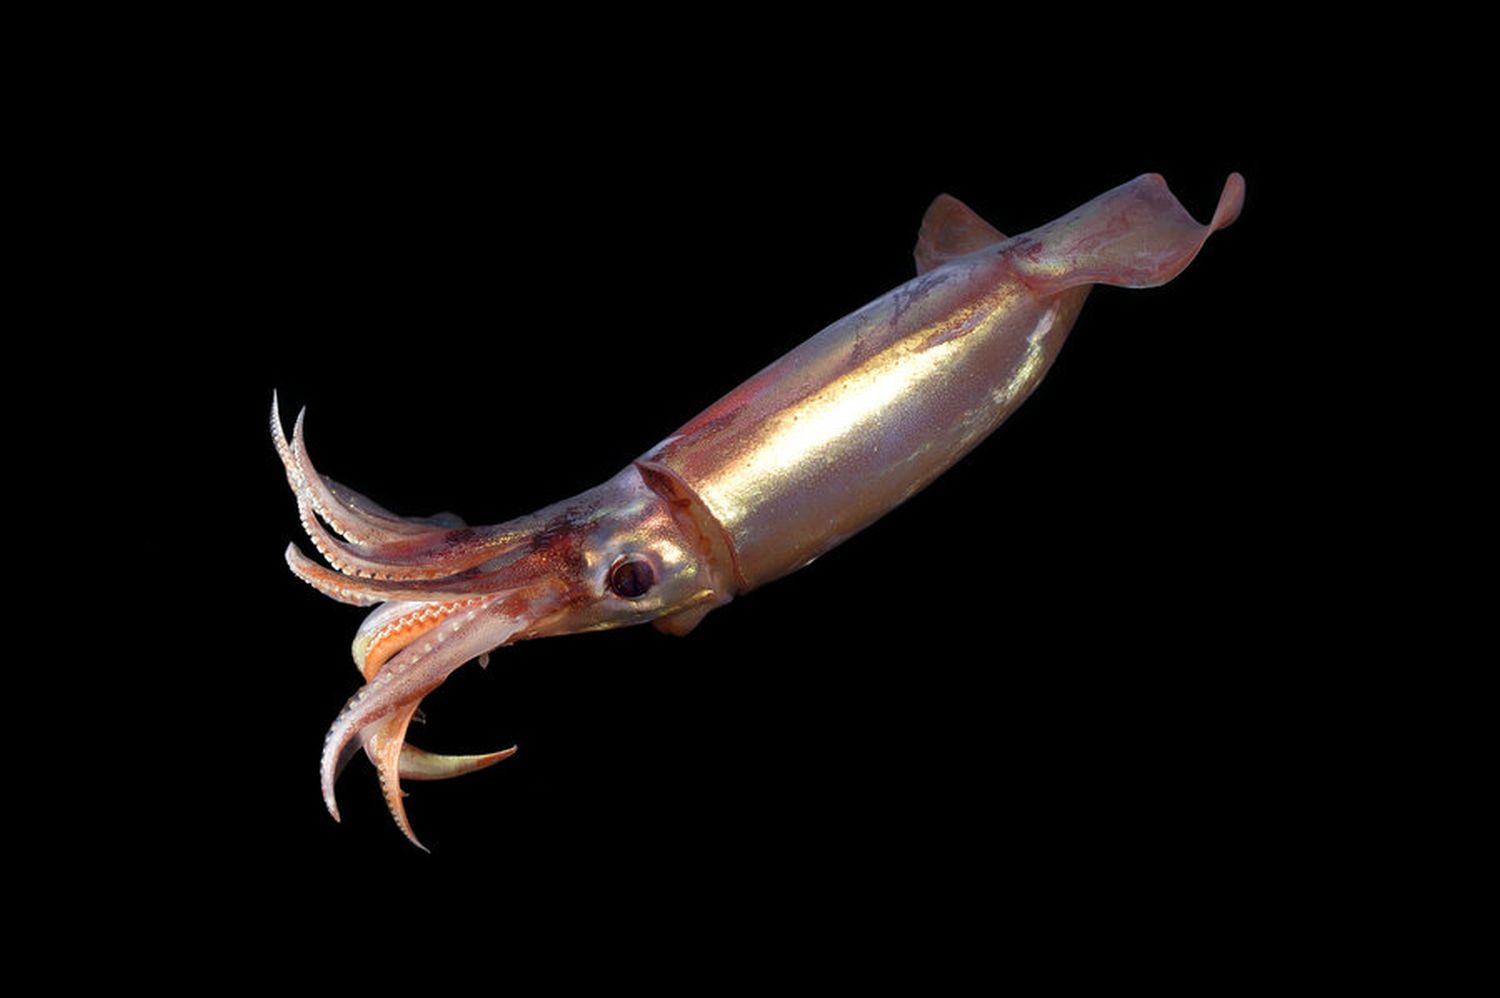 A specimen of the atlantic squid Sthenoteuthis pteropus. Photo: Solvin Zankl, www.solvinzankl.com